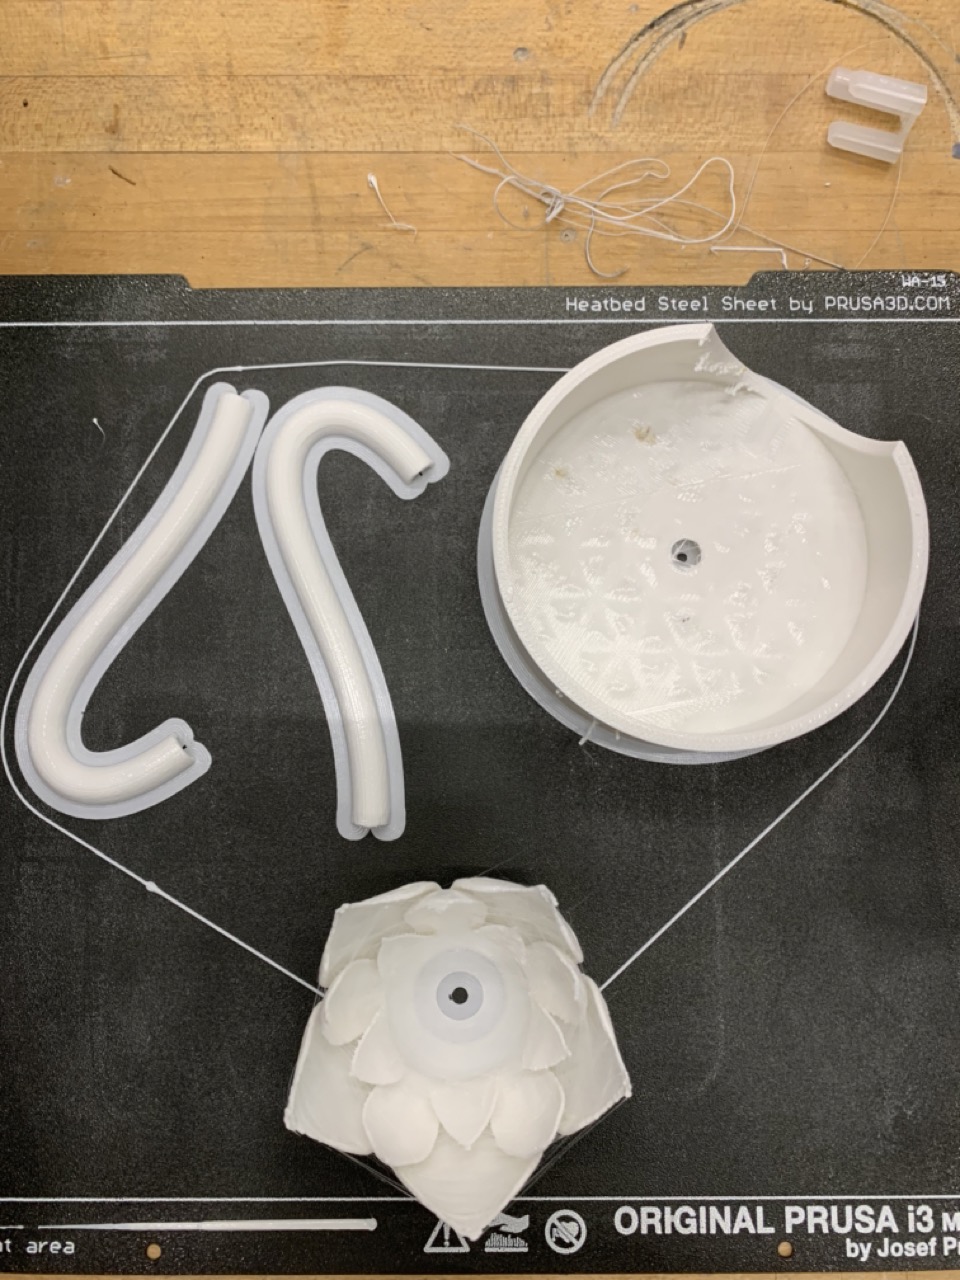 3D print process